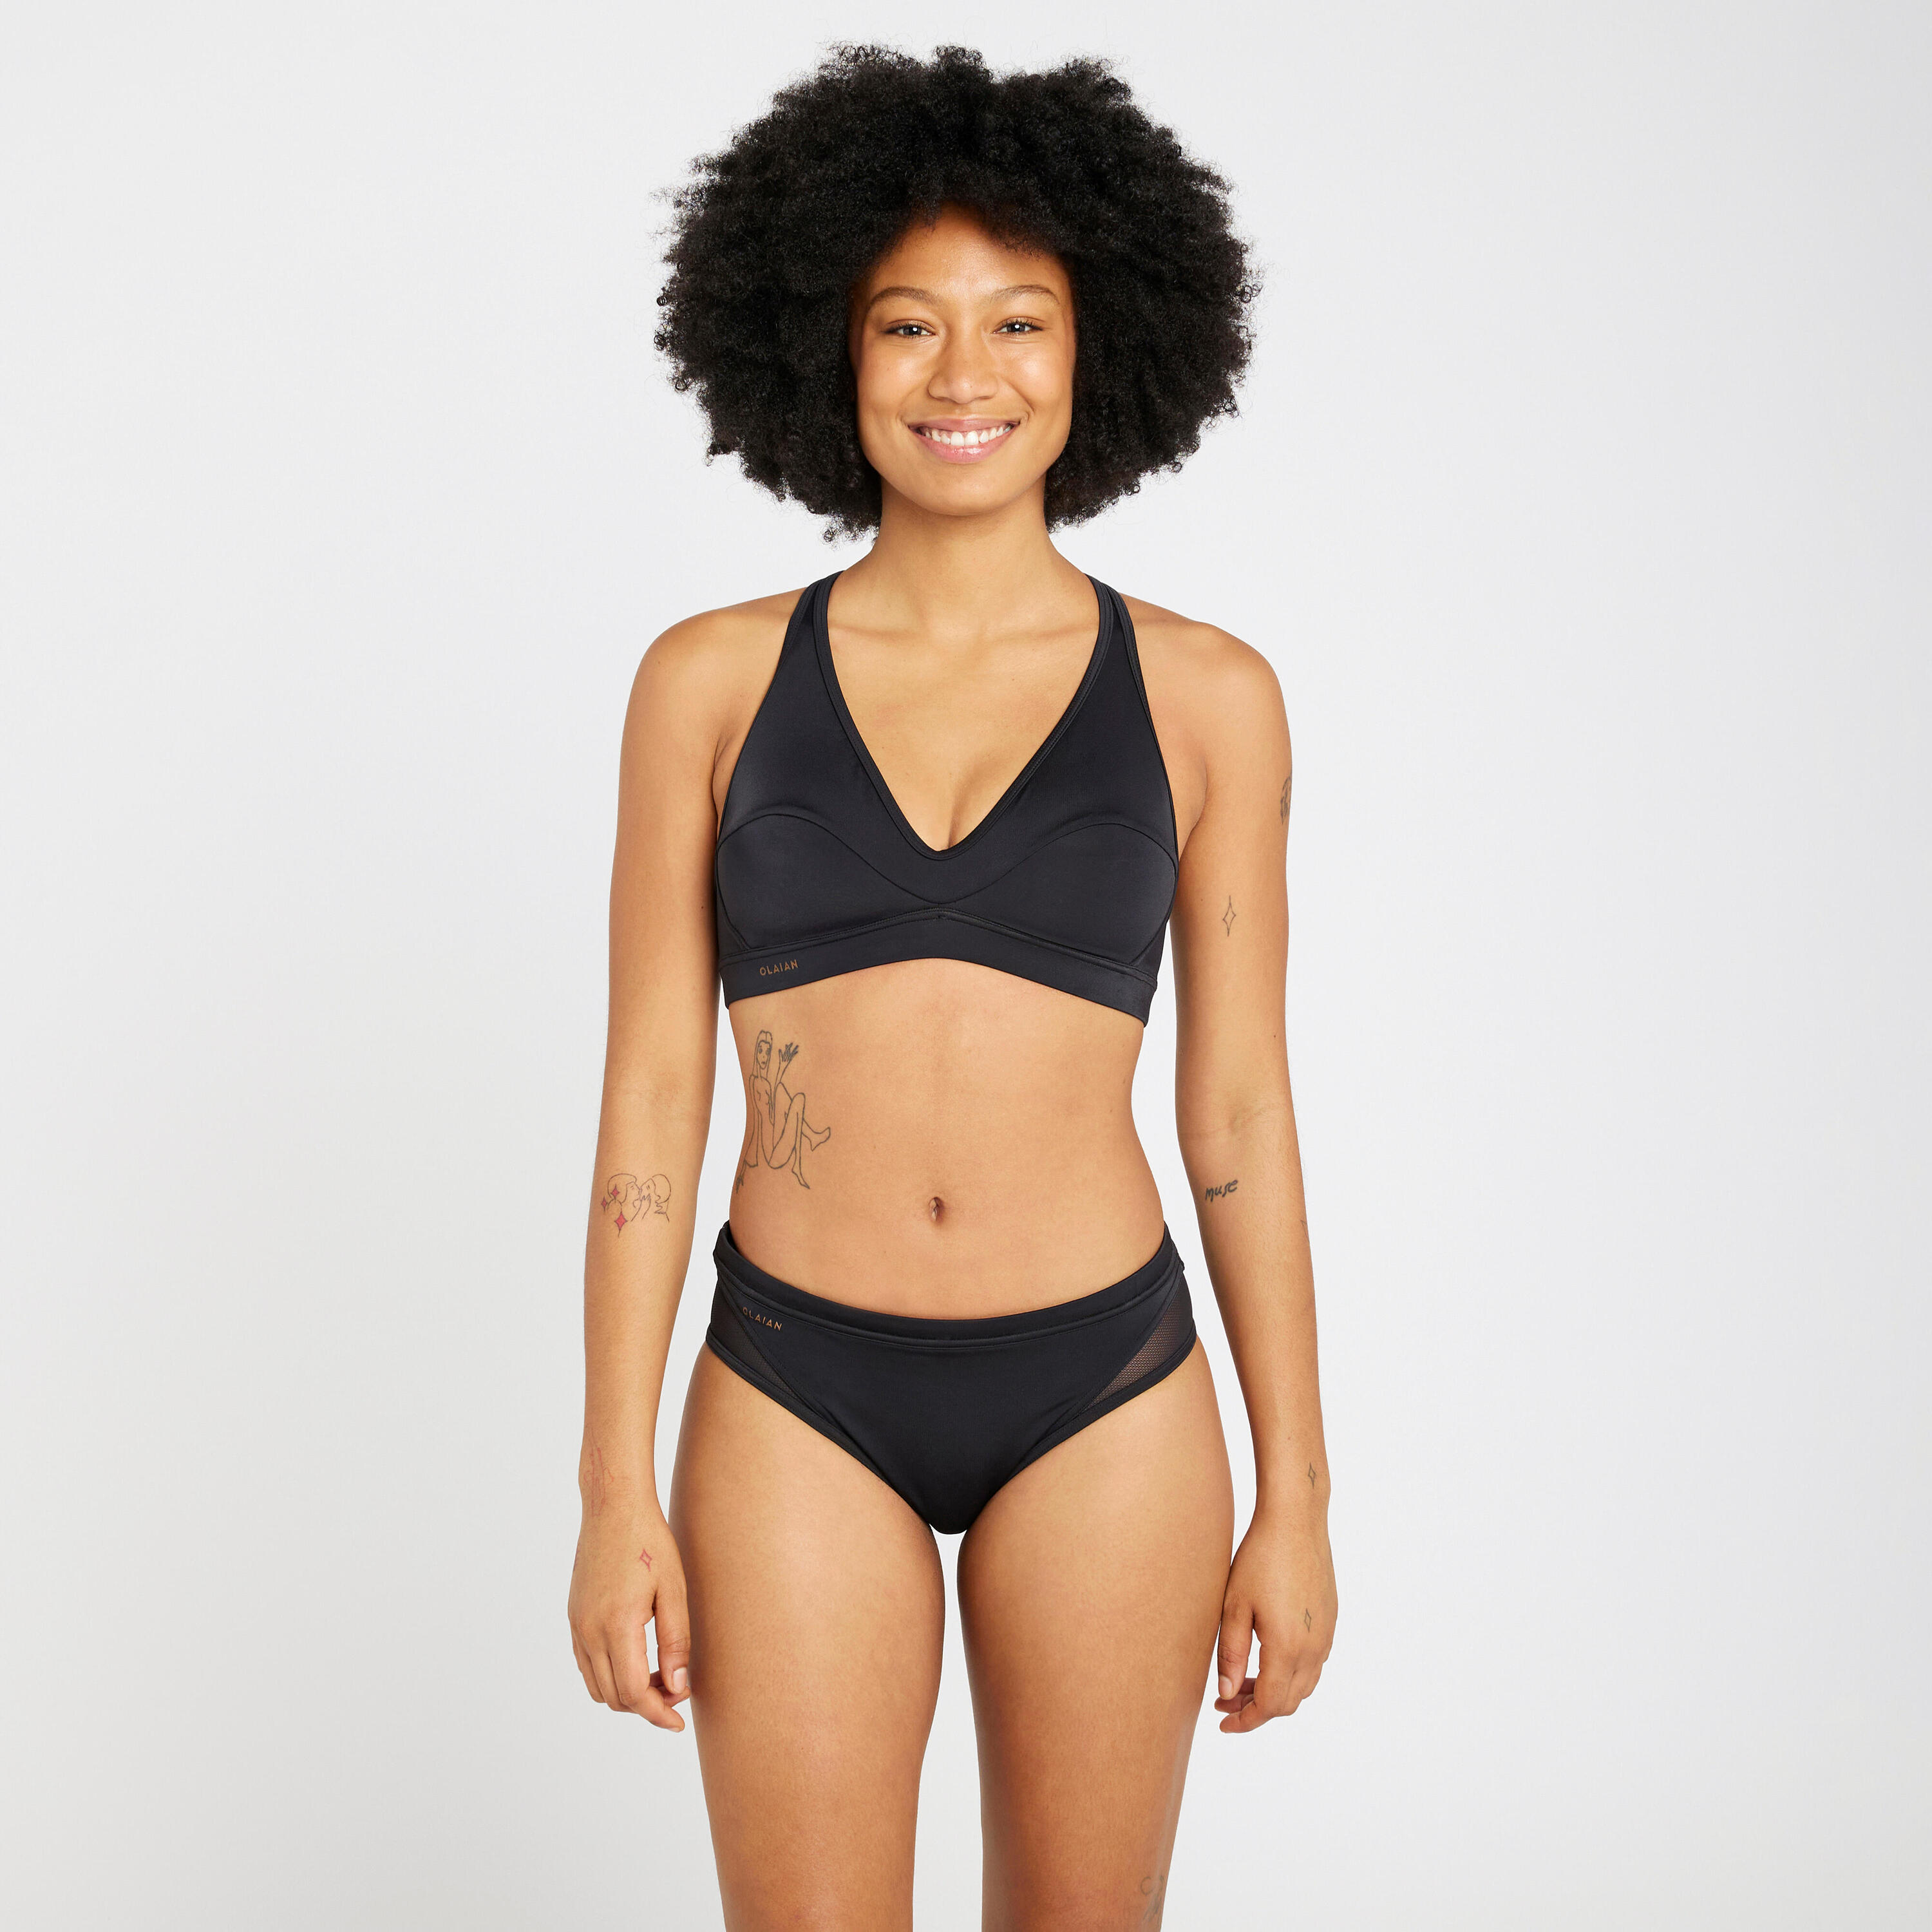 Women's briefs swimsuit bottoms - Savana black 6/6